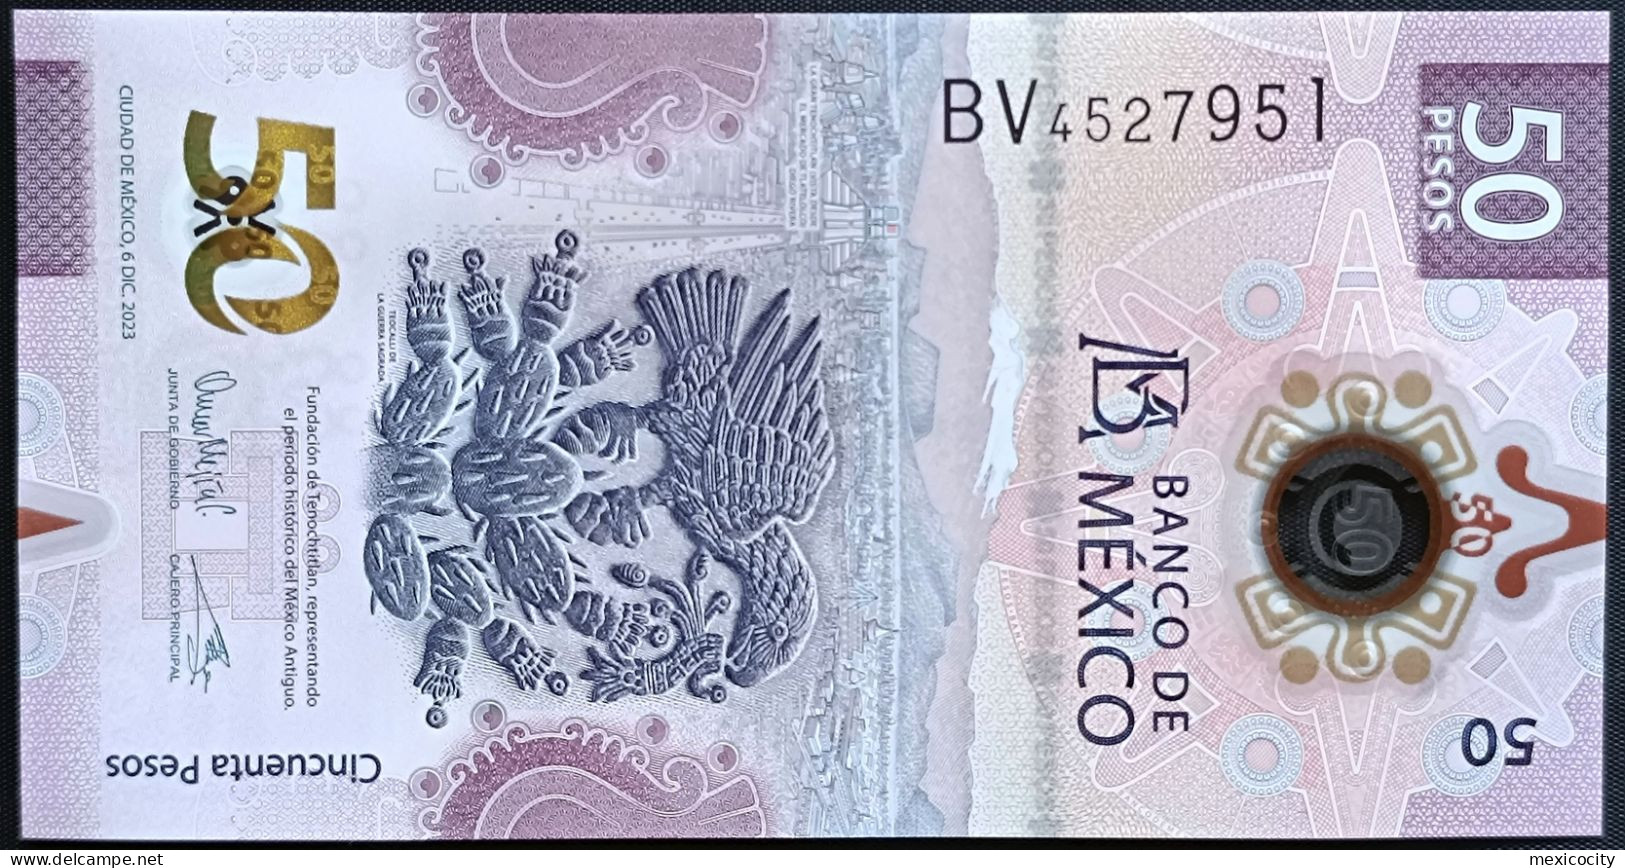 MEXICO $50 ! SERIES BV 6-DEC-2023 DATE ! Omar Mejia Sign. AXOLOTL POLYMER NOTE Mint BU Crisp Read Descr. For Notes - Mexique